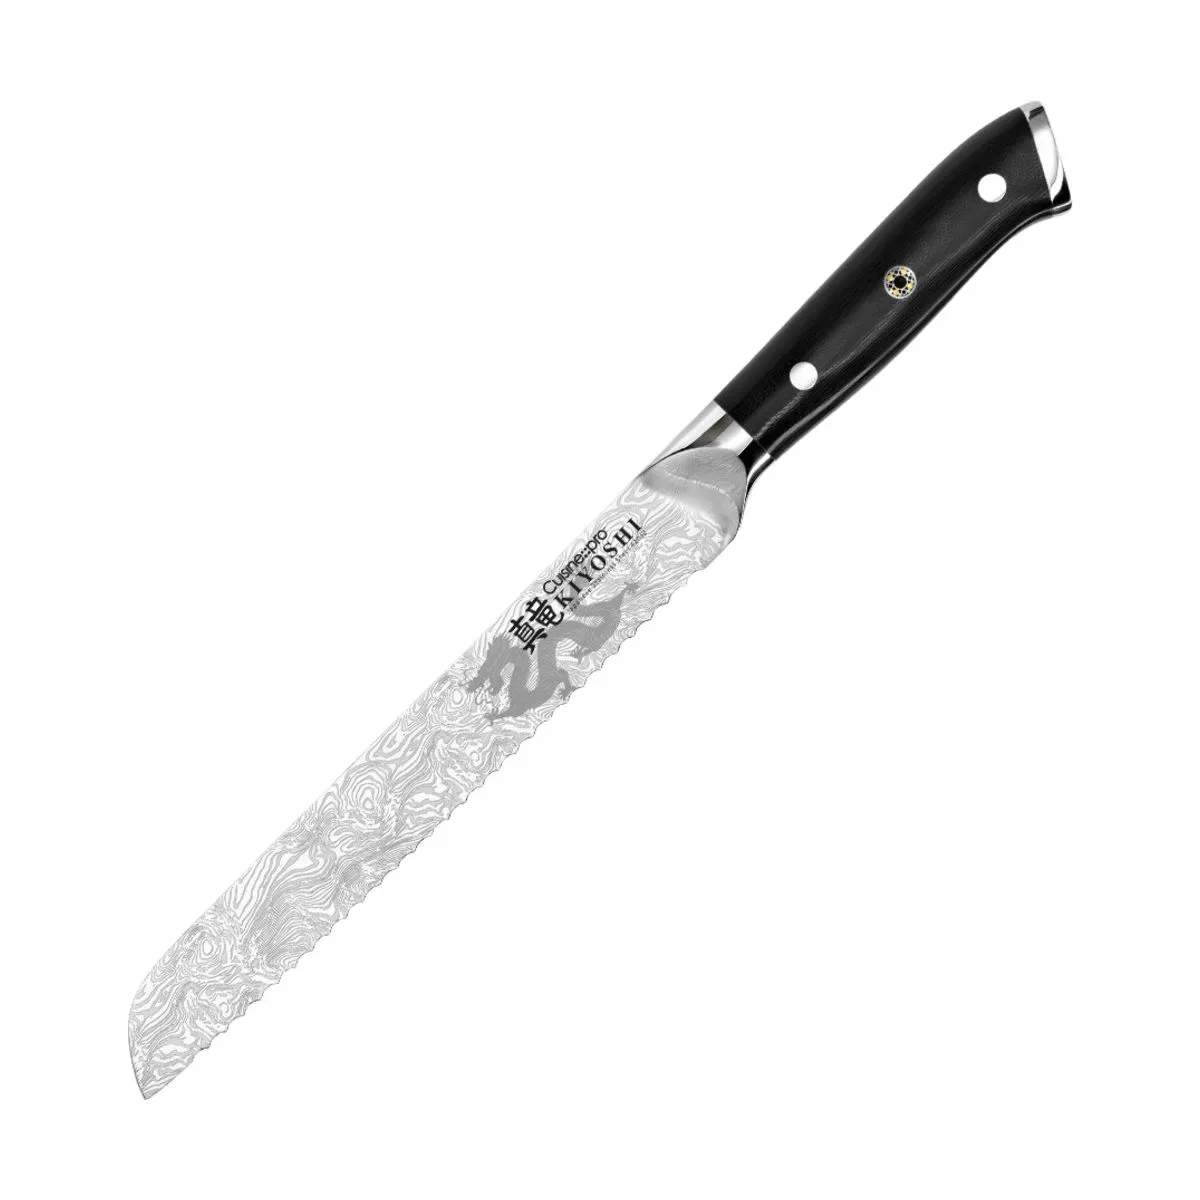 KIYOSHI™ Brødkniv, sølv/sort, large